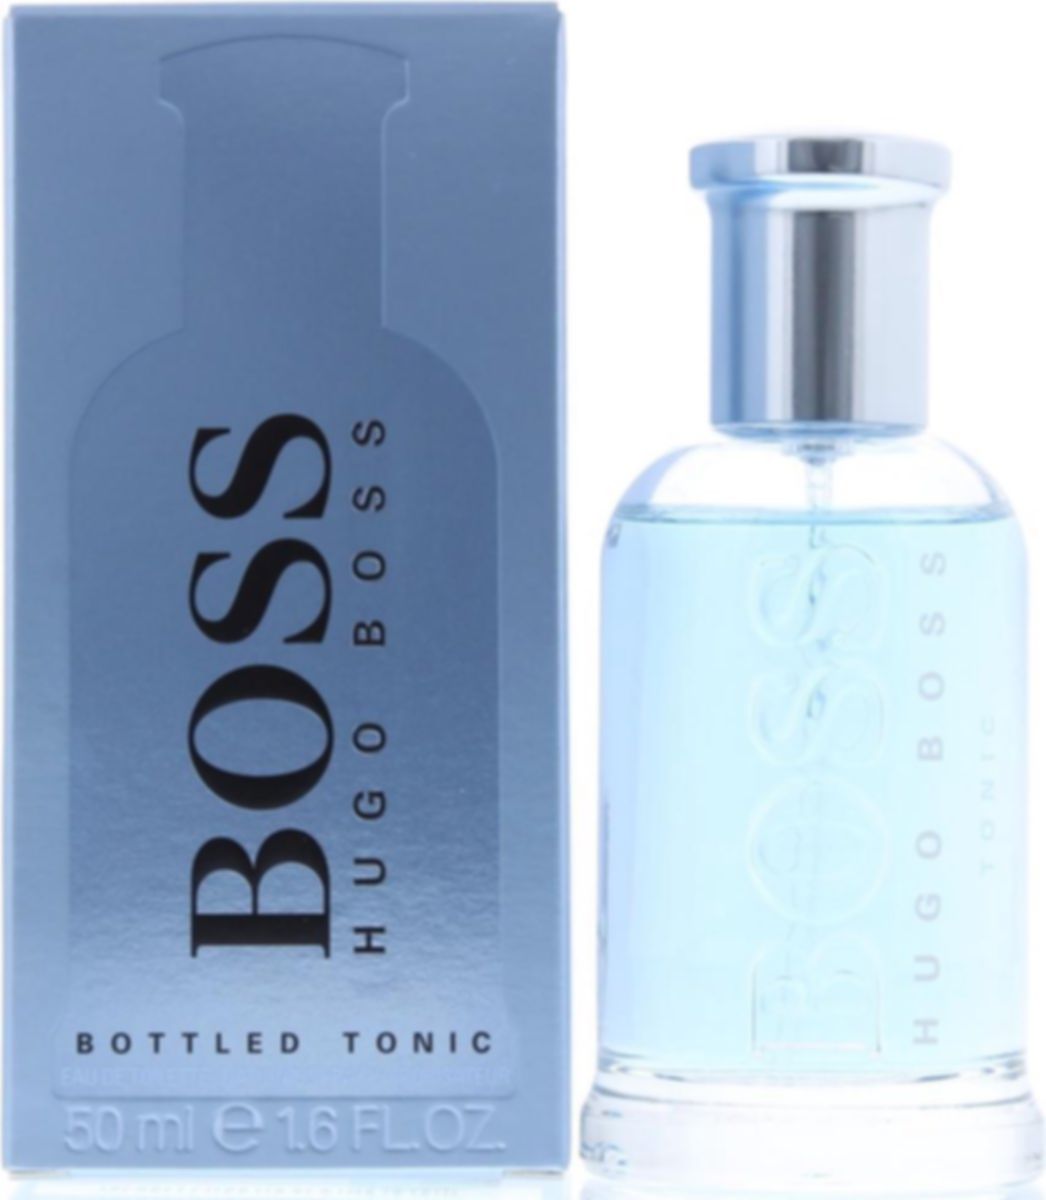 Hugo Boss Bottled Tonic Eau de toilette doos